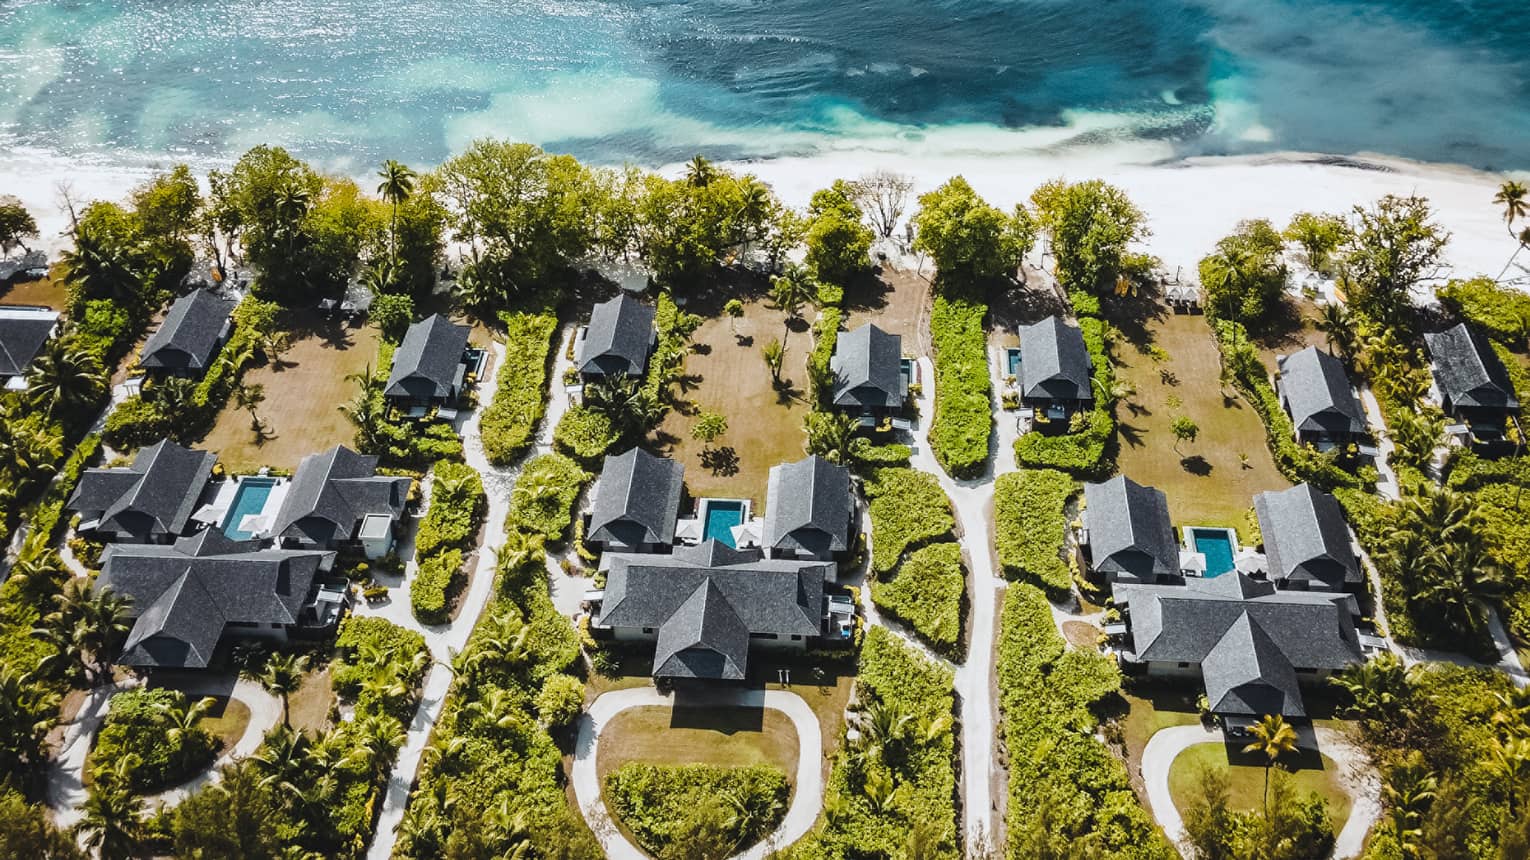 Aerial view of villas amidst greenery, facing the ocean